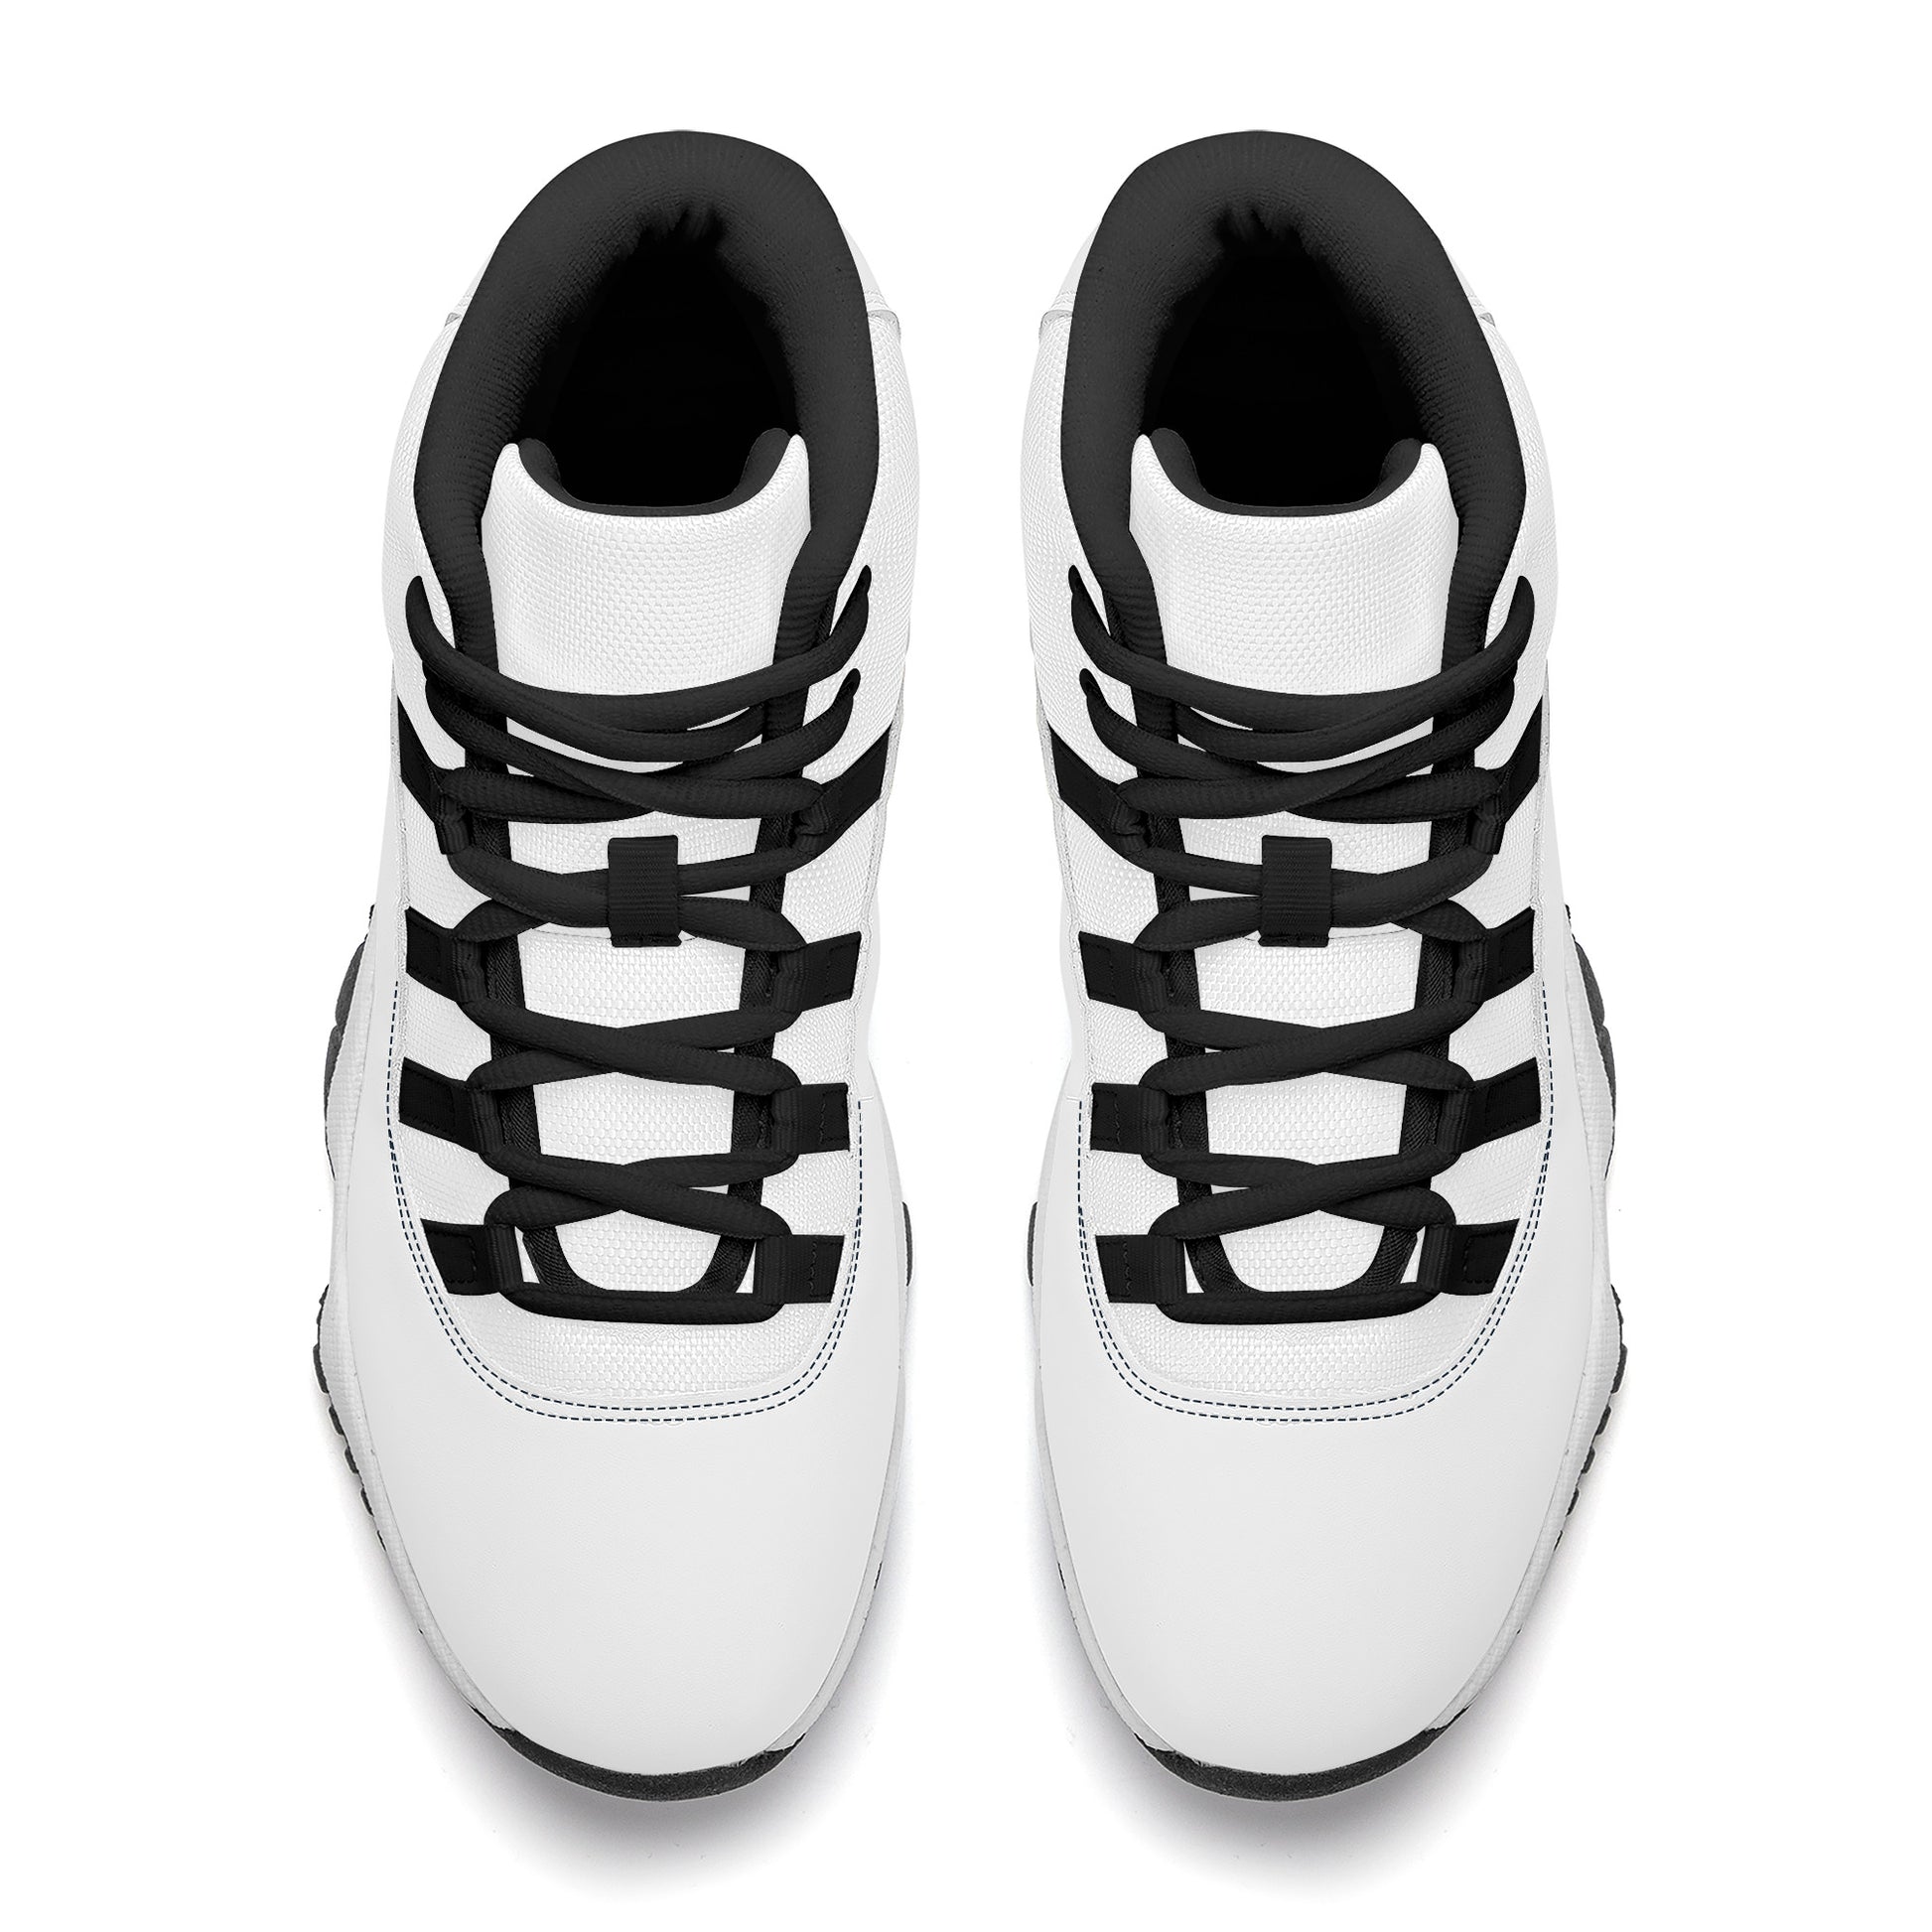 Custom High Top Sneakers - Black Air Retro Colloid Colors 